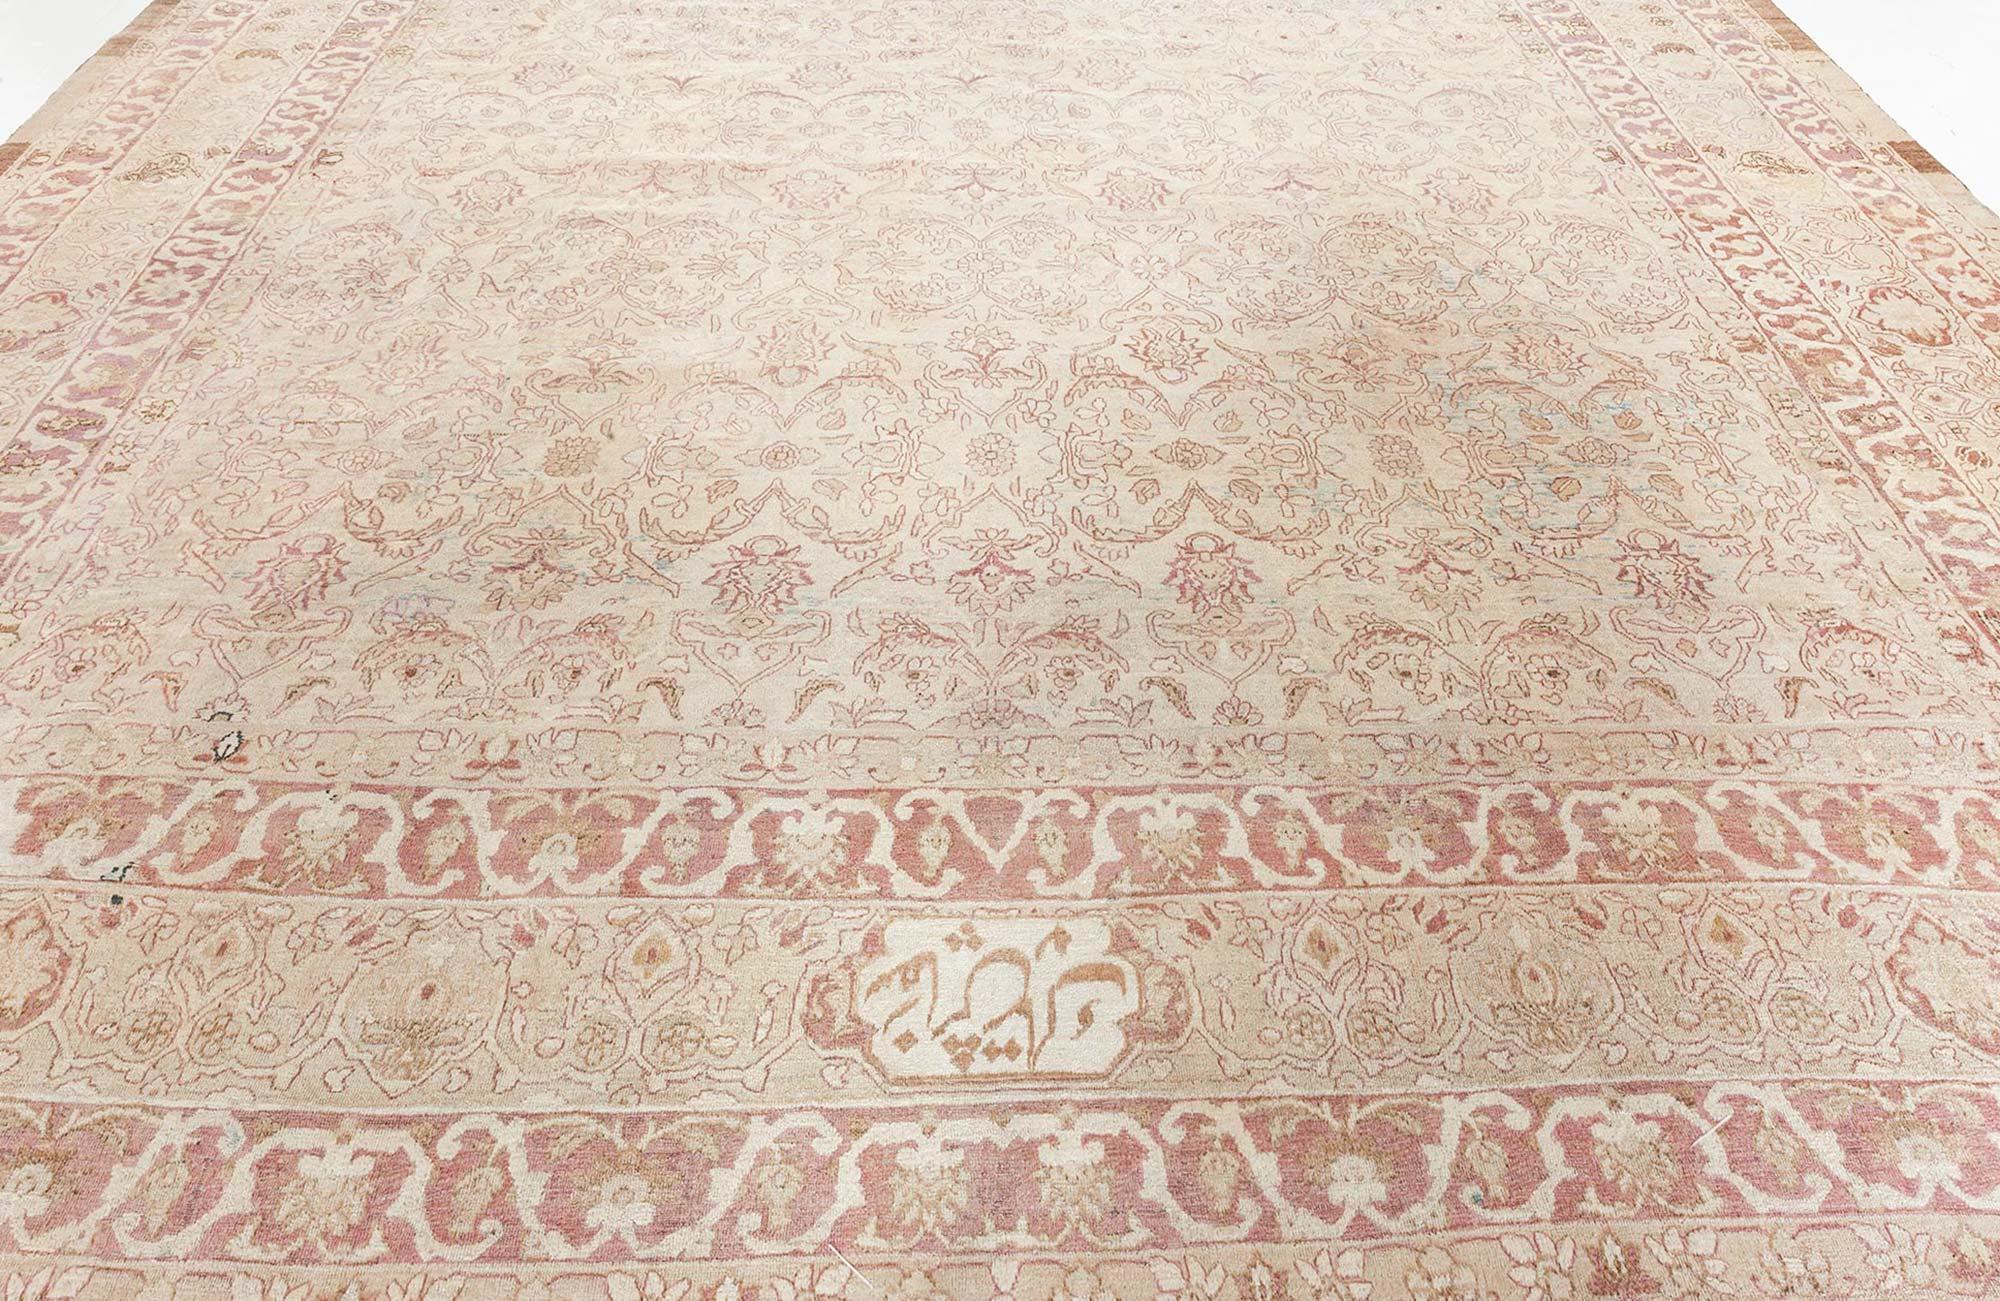 Antique Persian Kirman rug
Size: 10'1